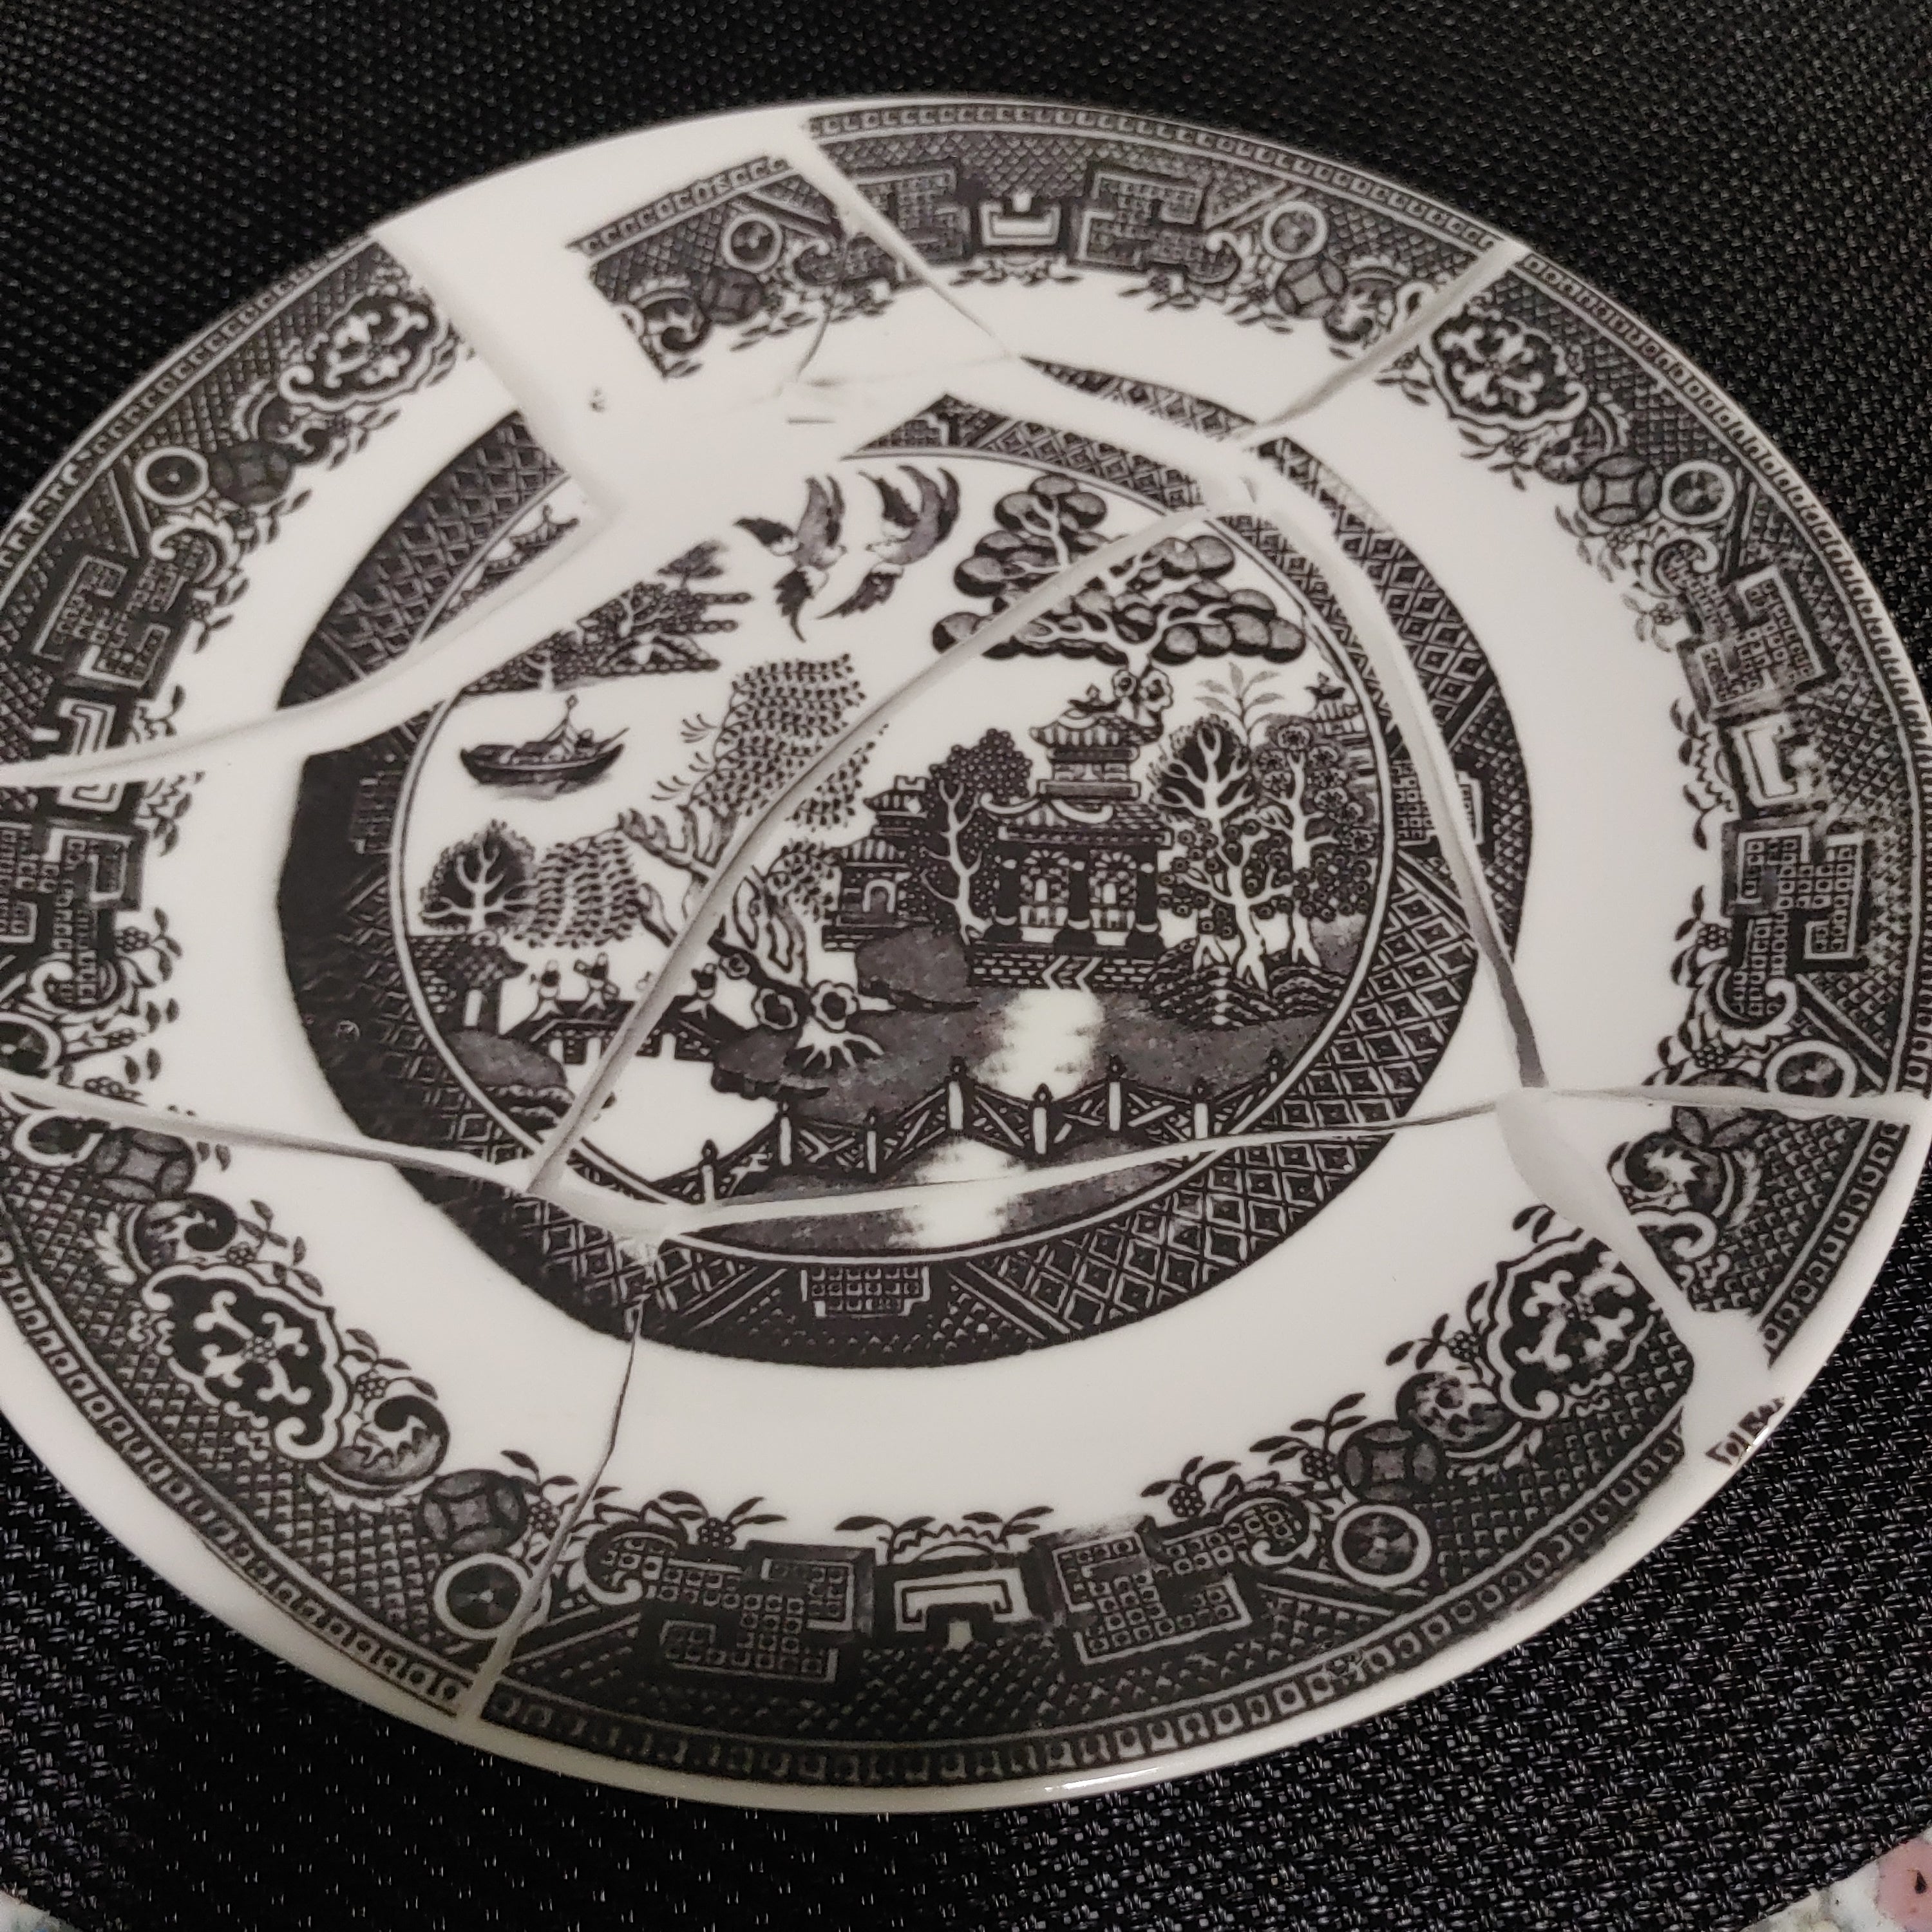 Black Widow Insideout Plate bone china collector